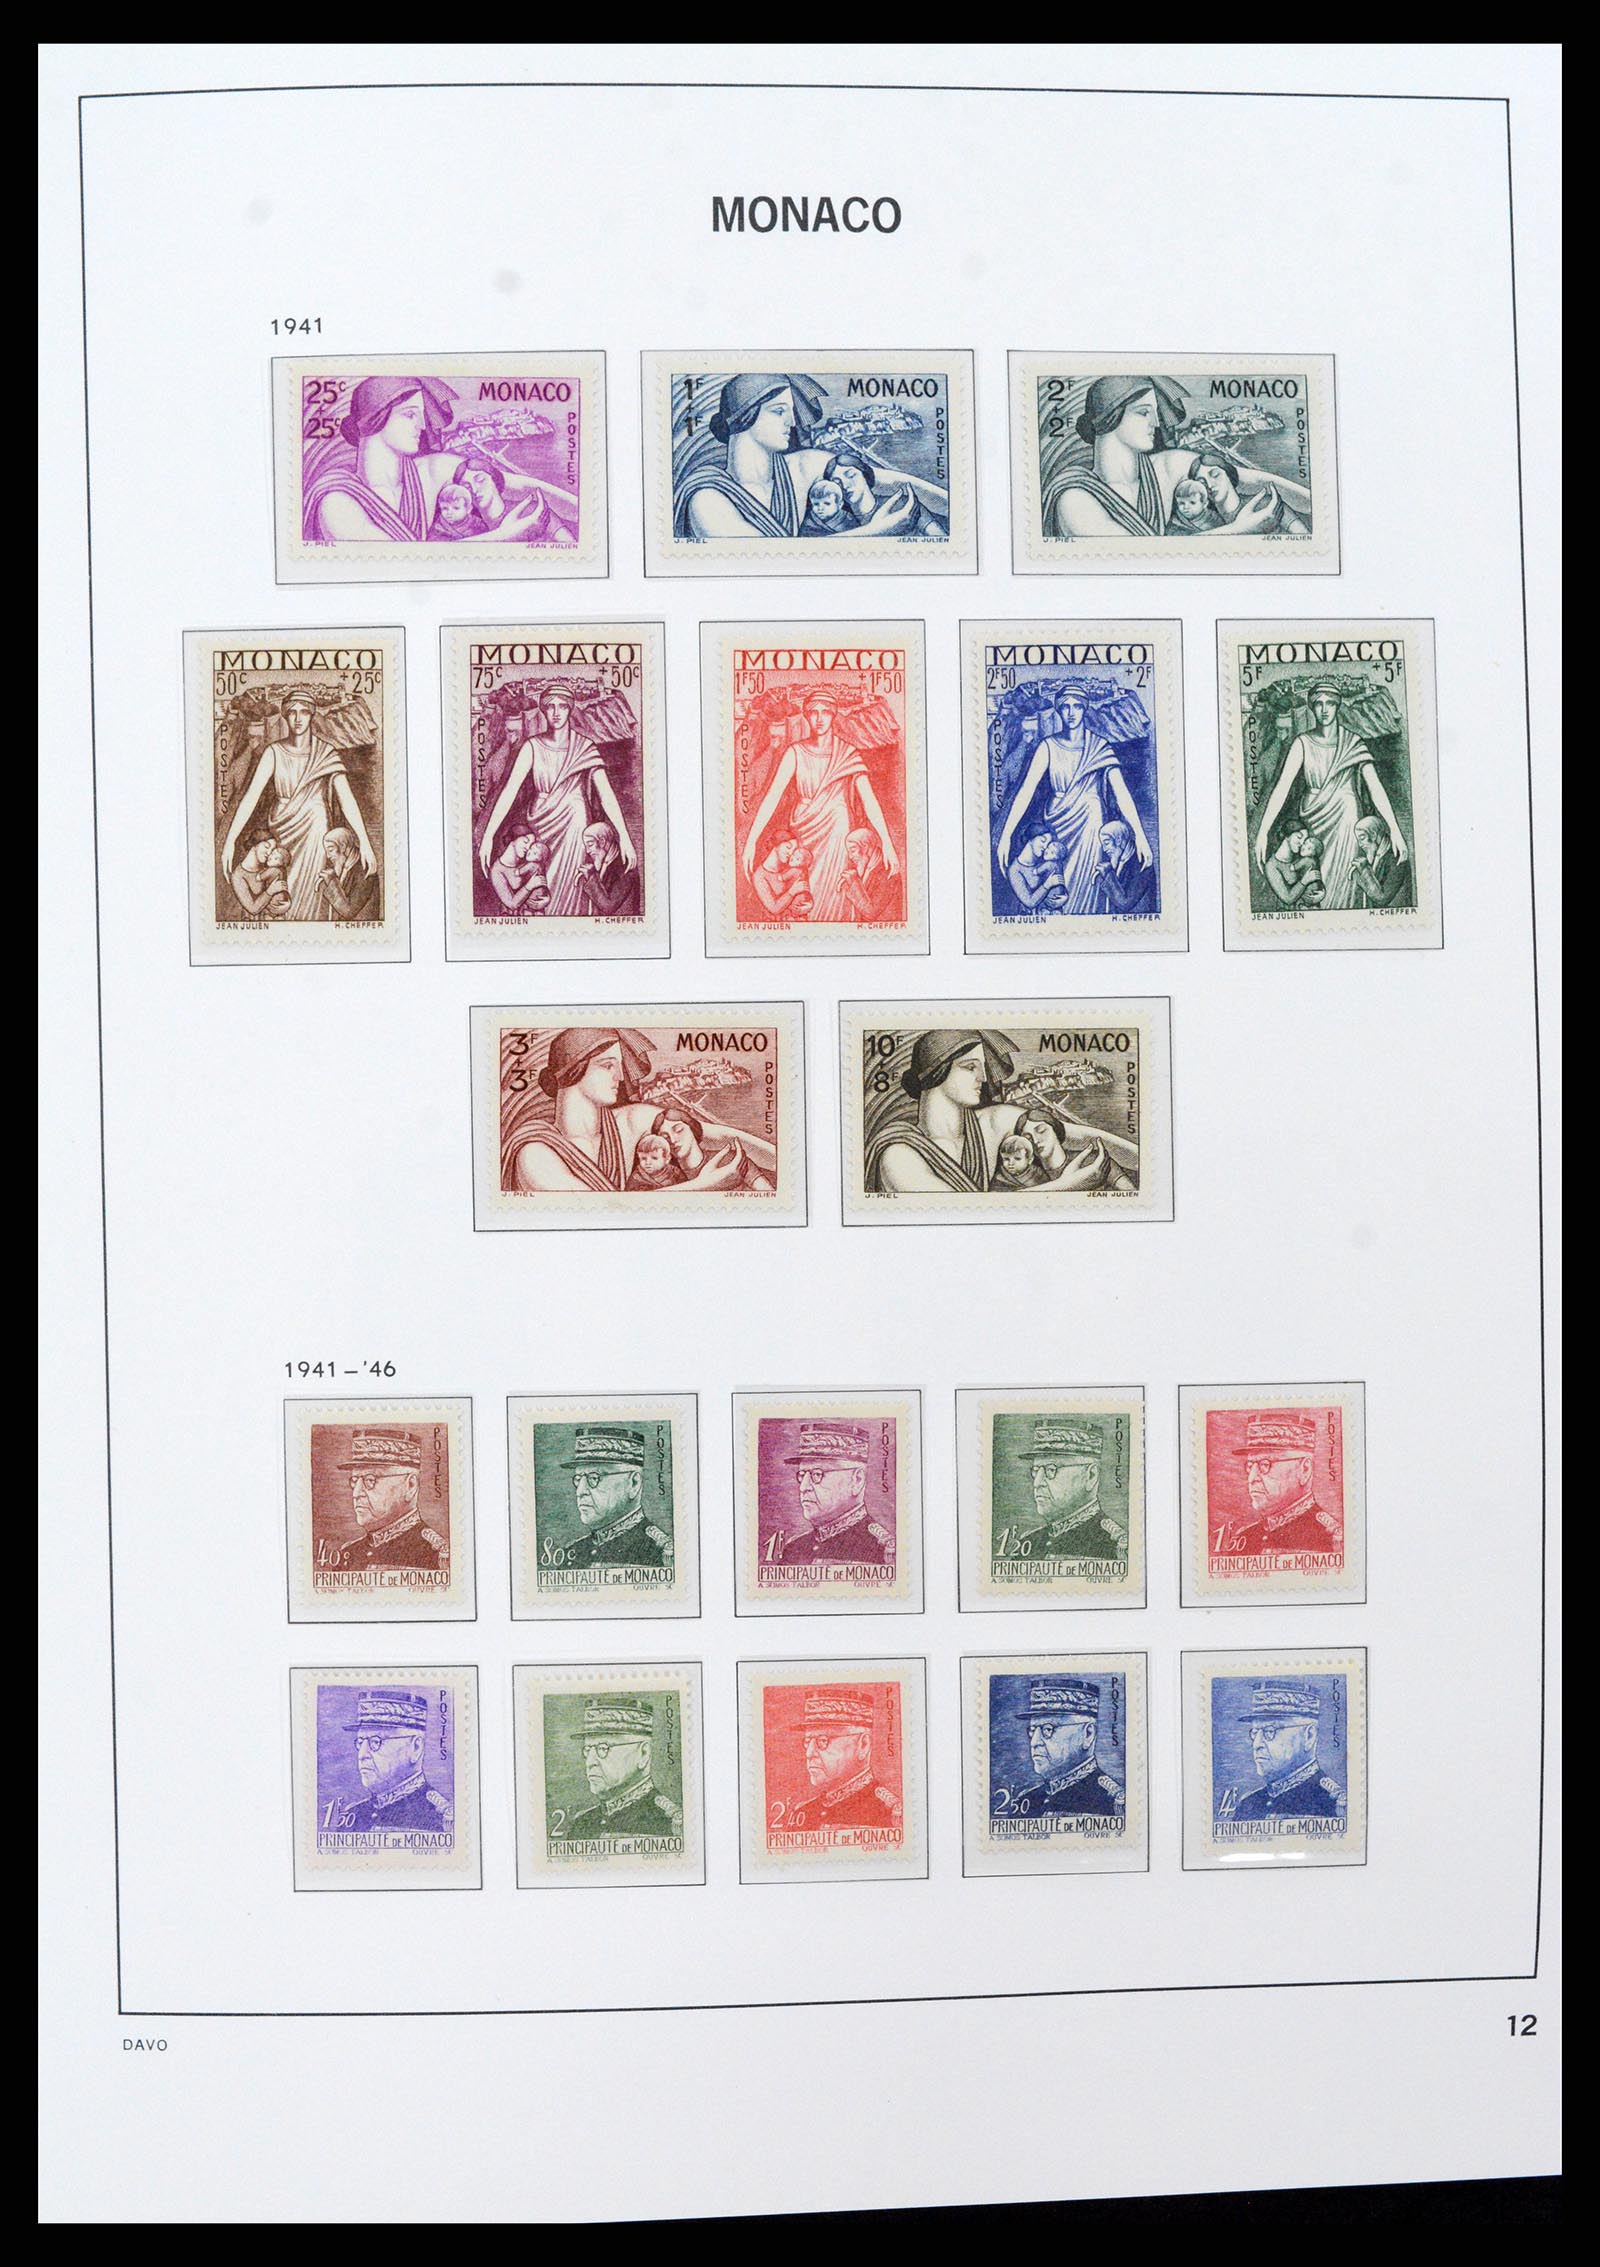 37279 012 - Stamp collection 37279 Monaco 1885-1969.